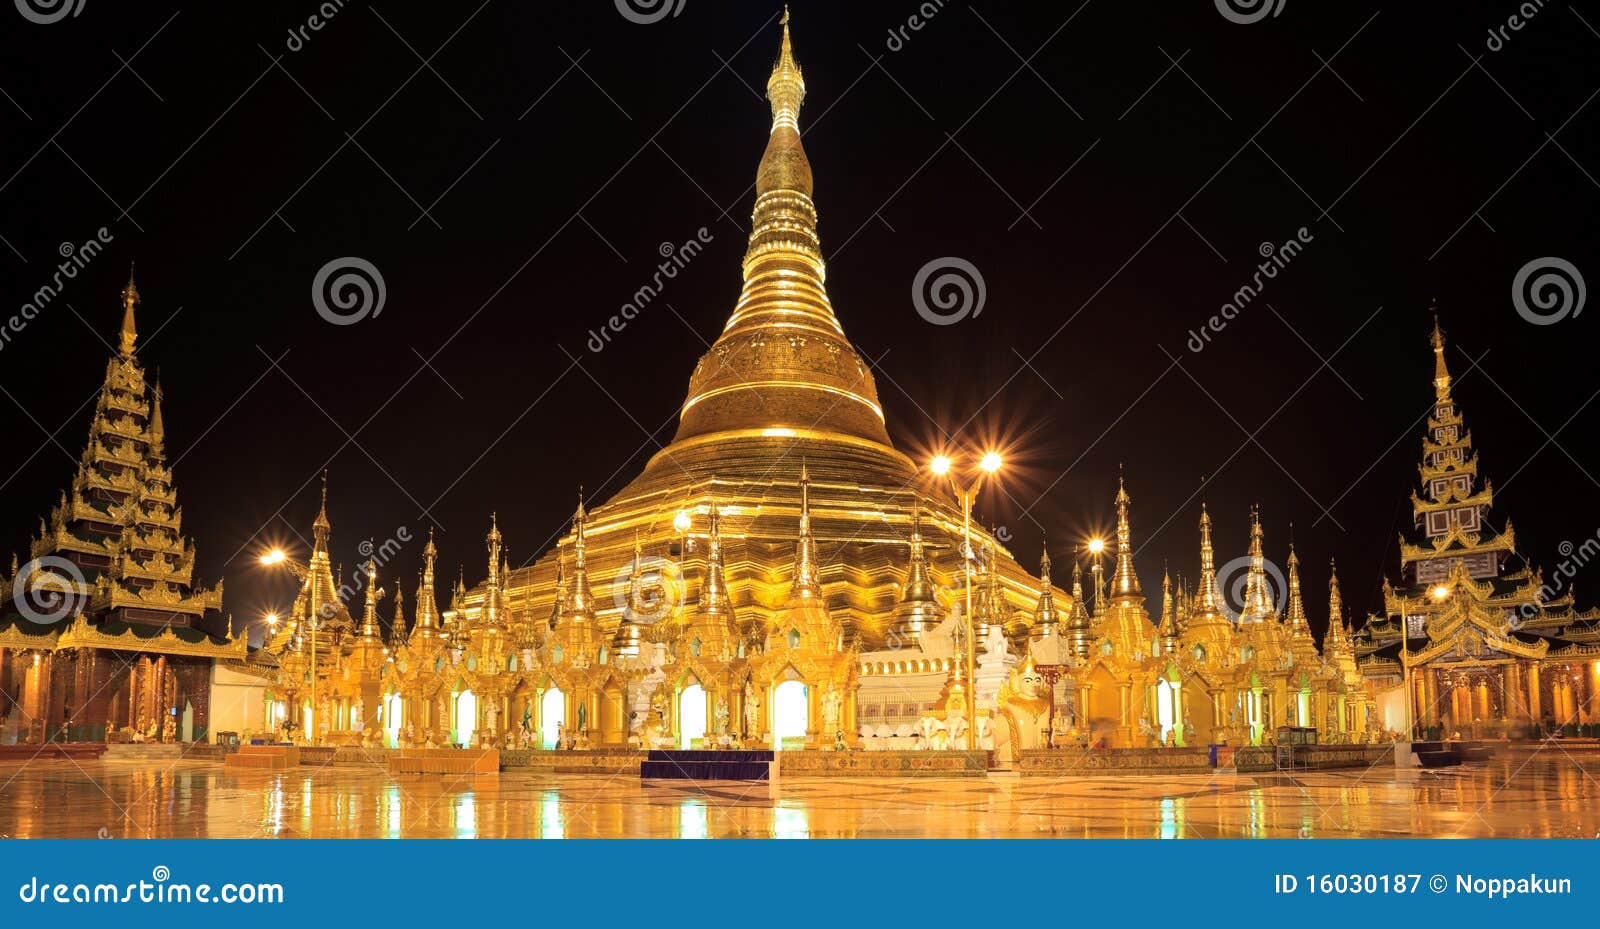 panorama shwedagon pagoda at night, yangon,myanmar